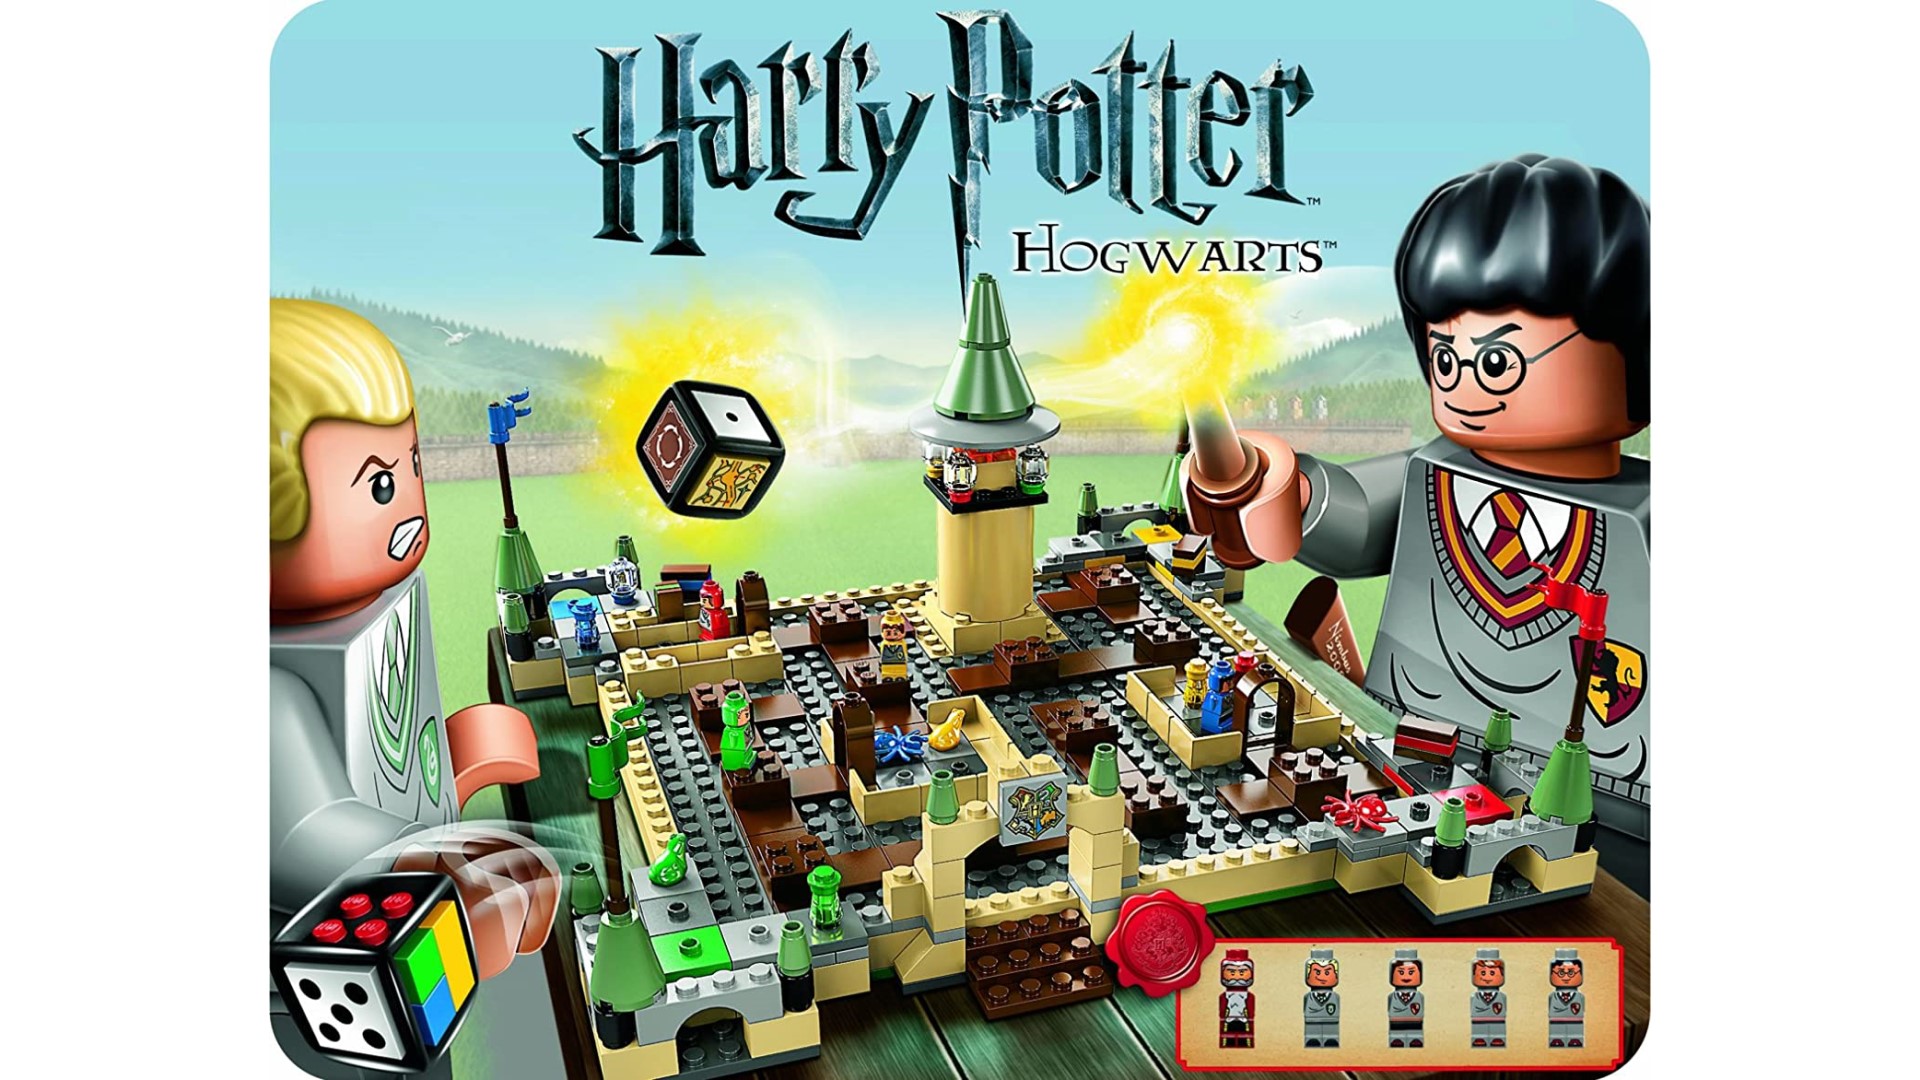 LEGO board games - Harry Potter Hogwarts game box art